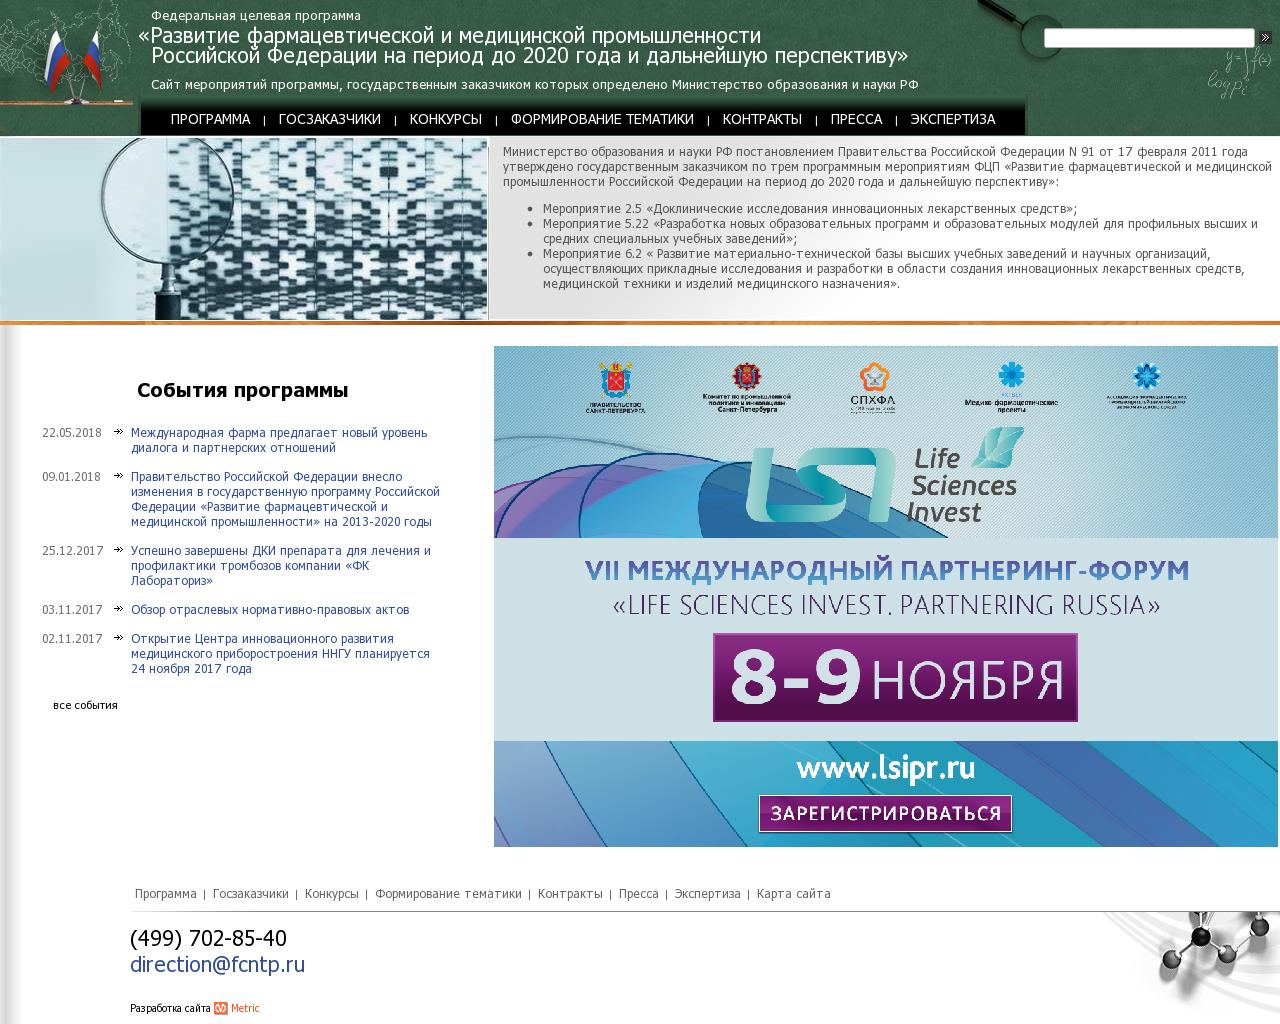 Изображение сайта fcpfarma.ru в разрешении 1280x1024